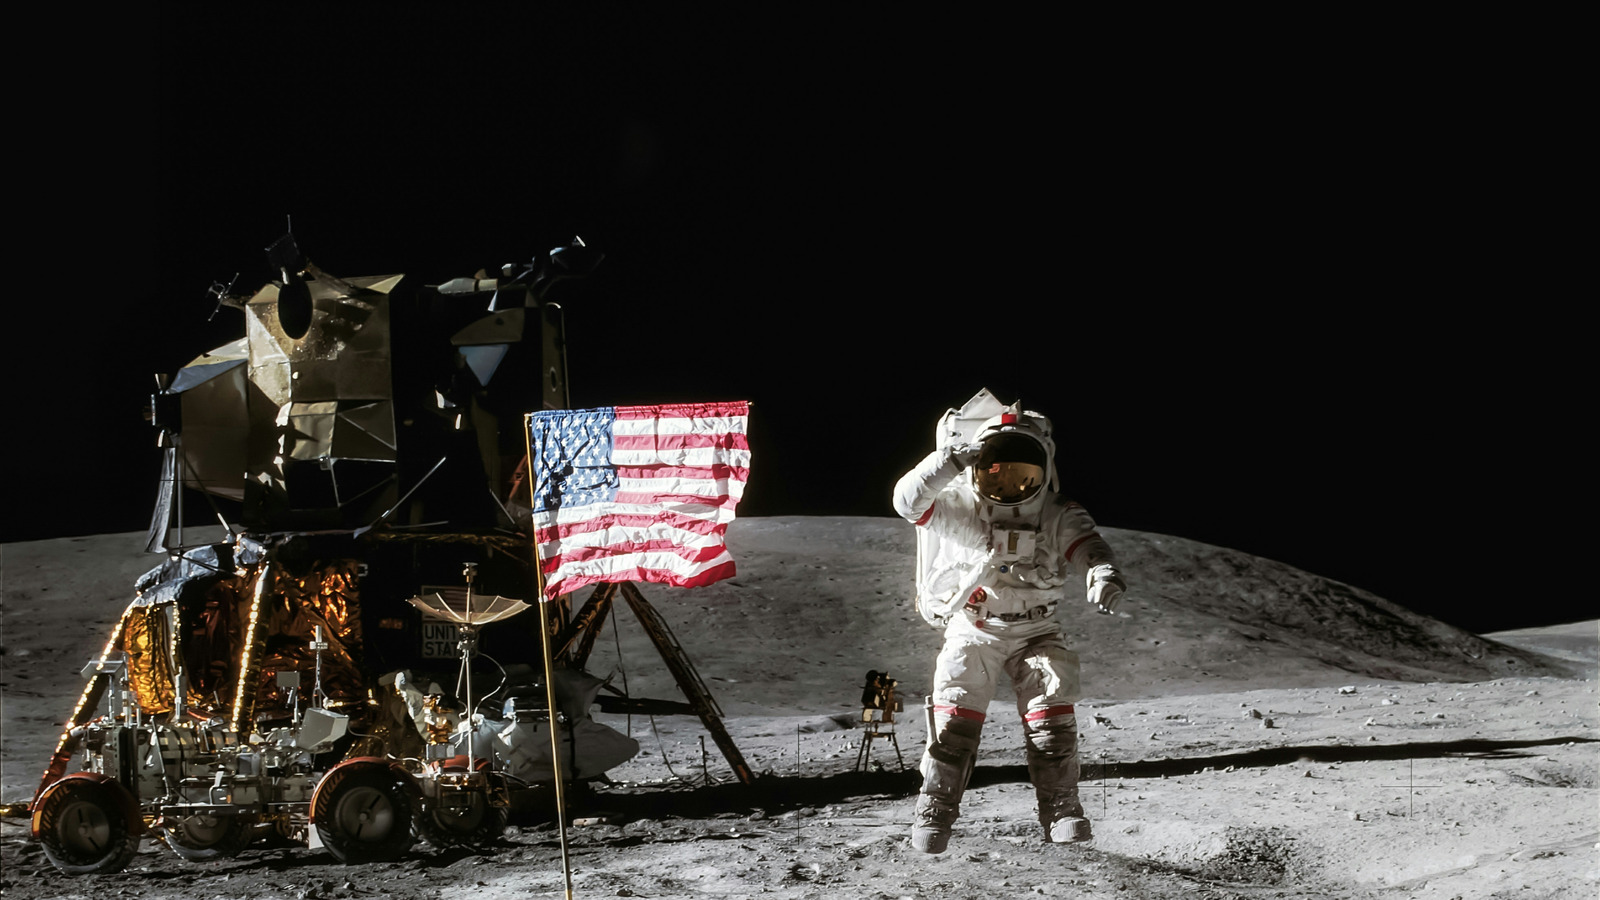 Man landed on the moon. Аполлон 16. Фотографии высадки американцев на луну. Астронавты на Луне хоровод. Америка полетела на луну.